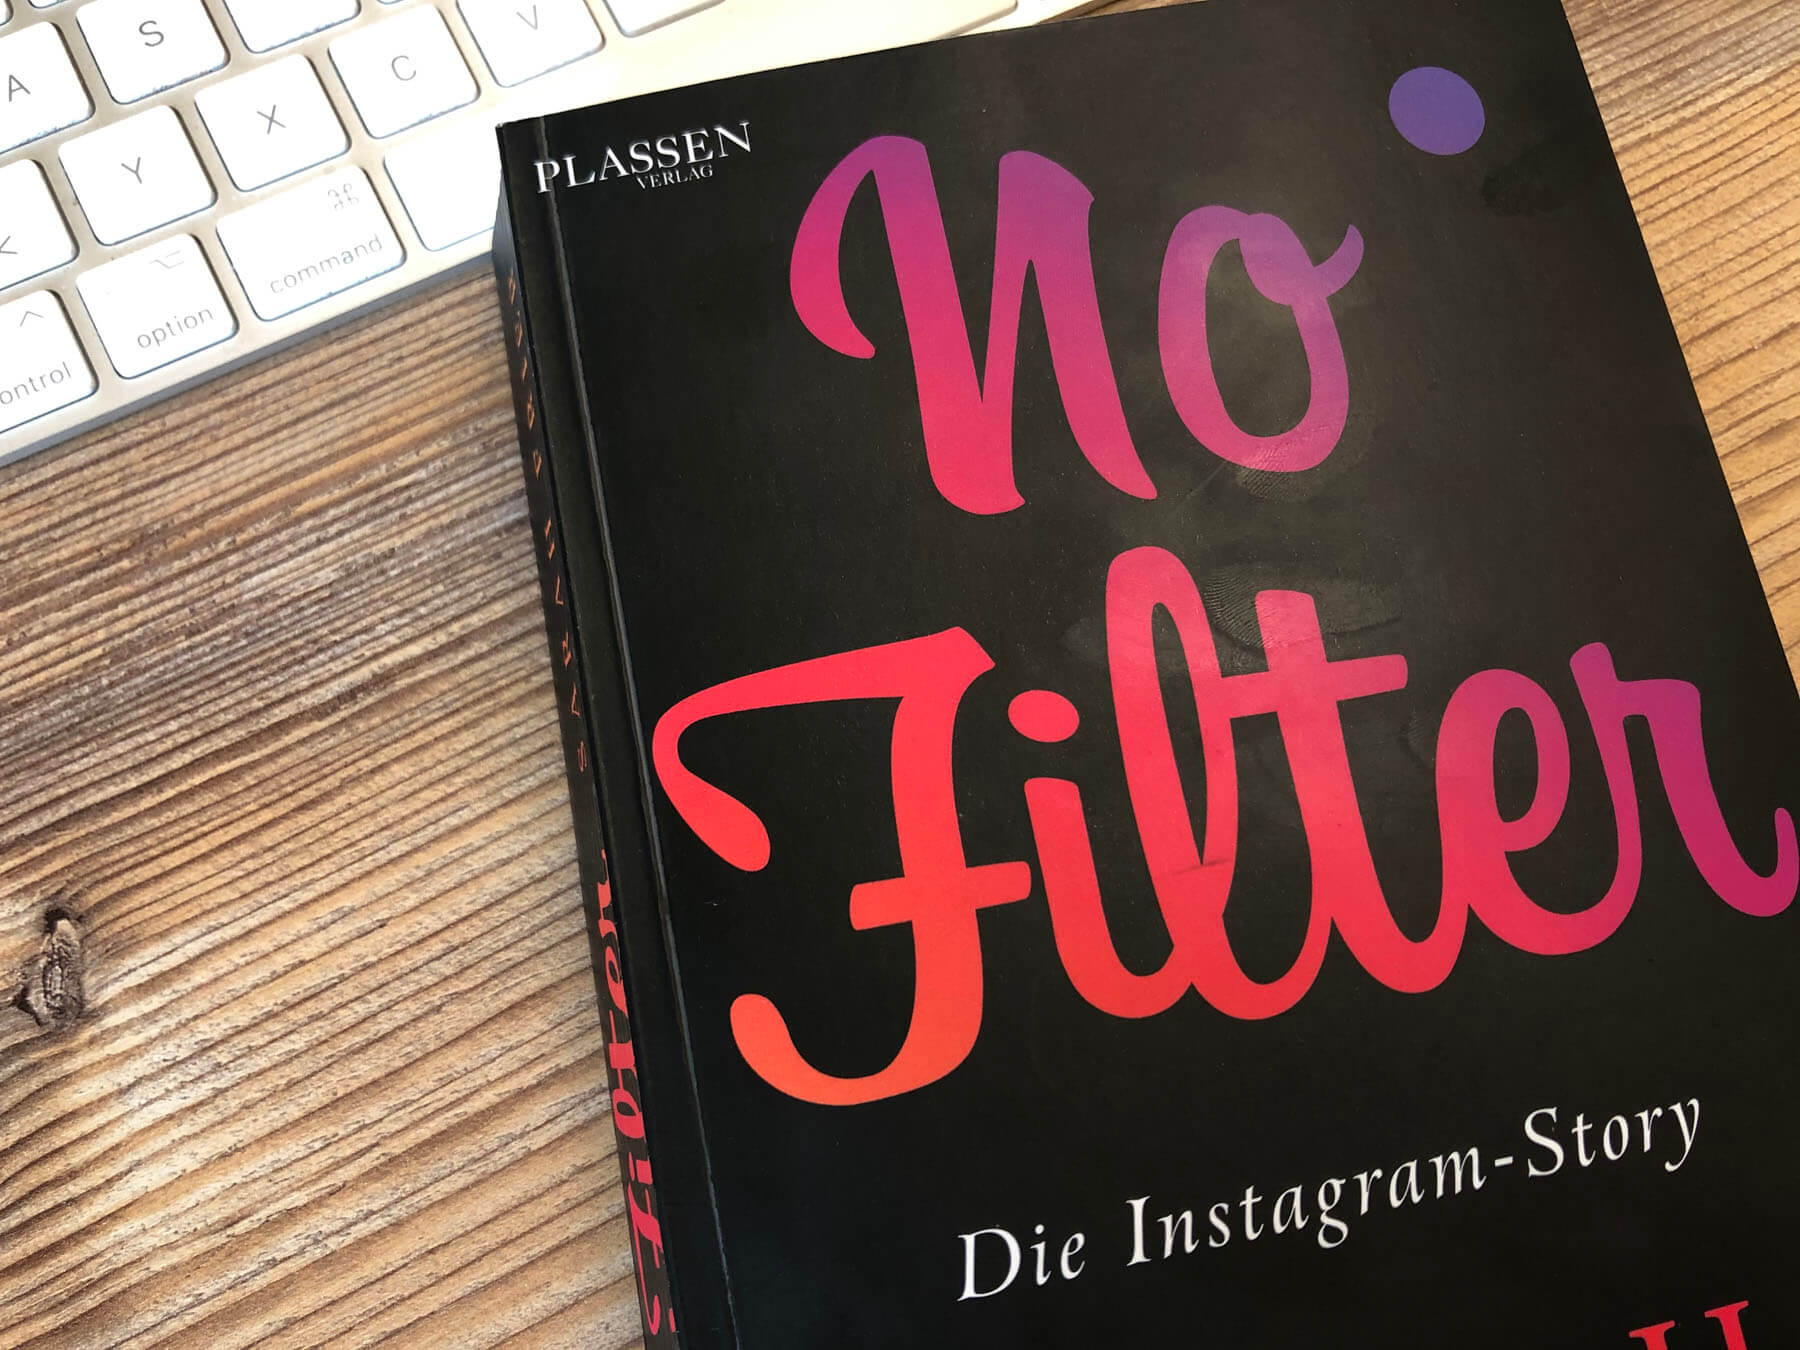 Die Instagram-Story No Filter 